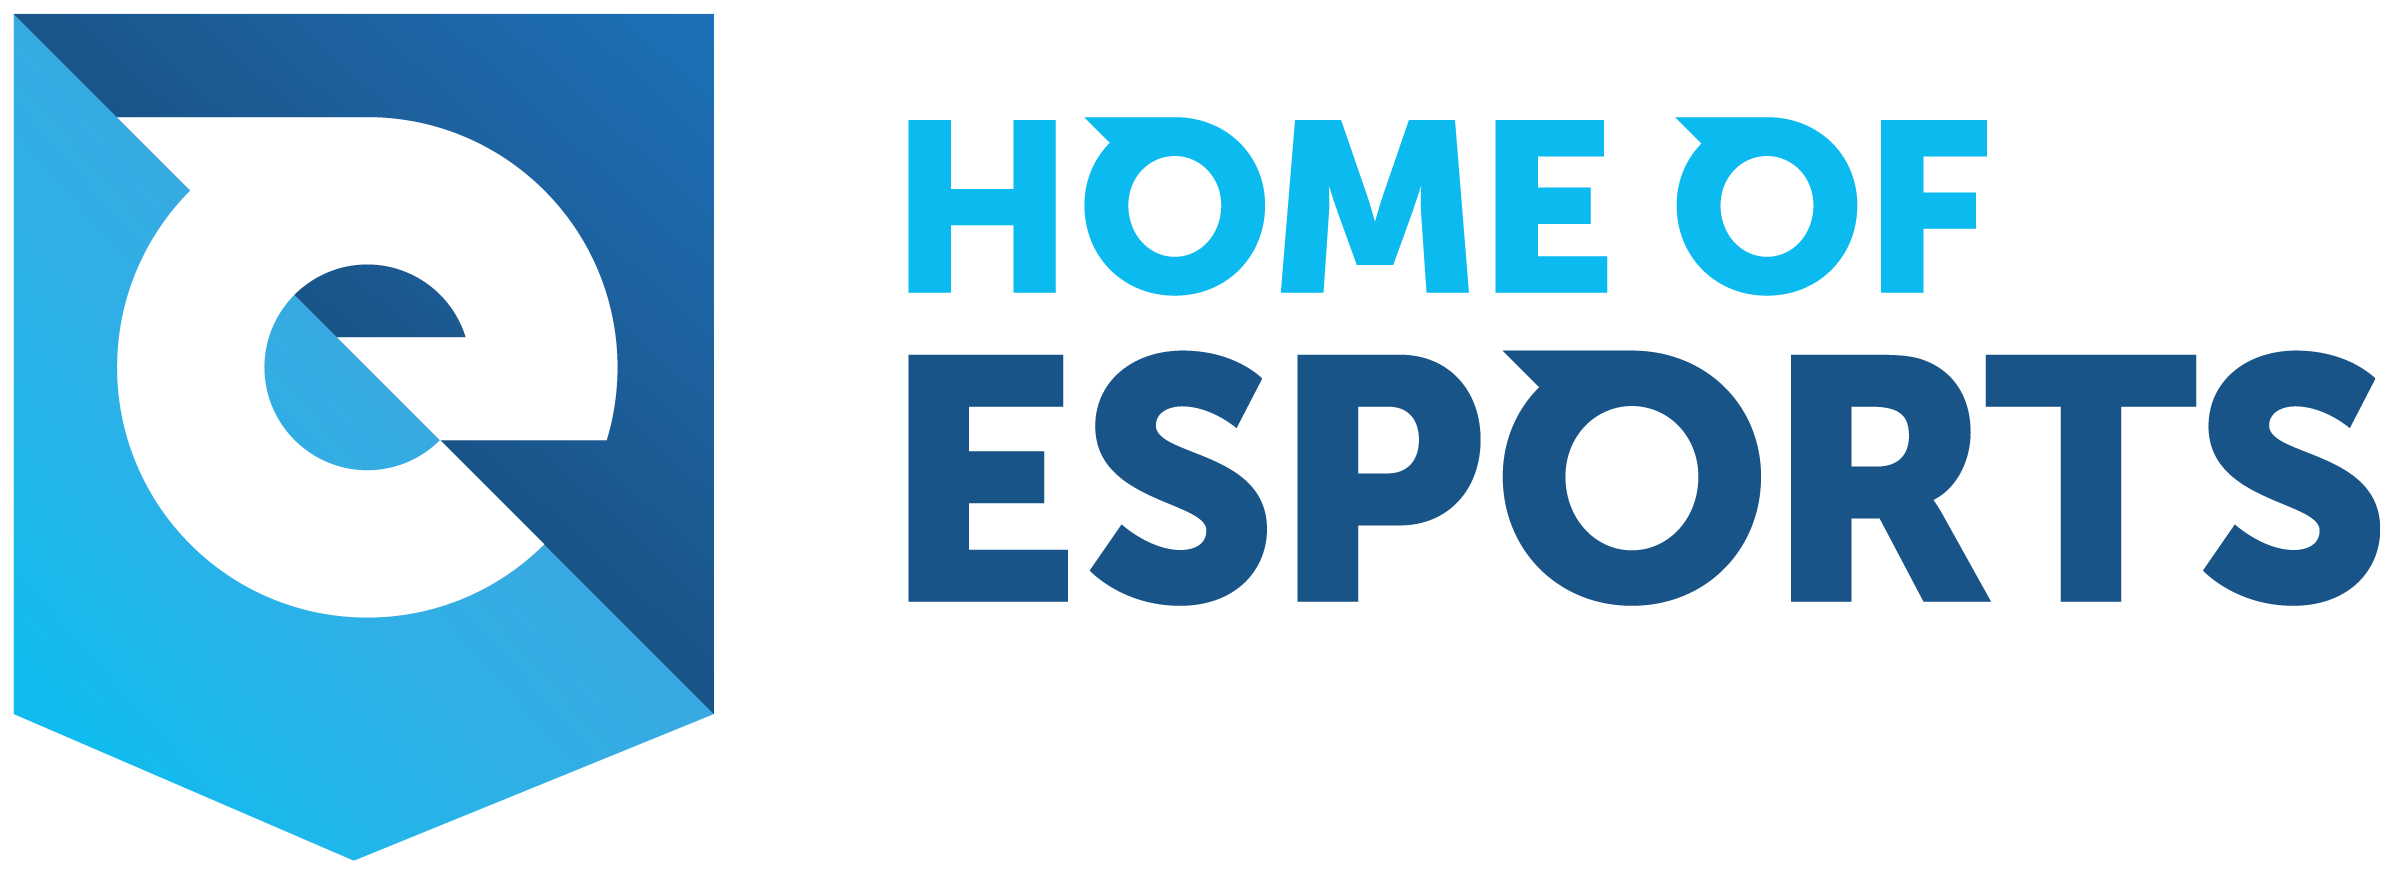 HOME Logo